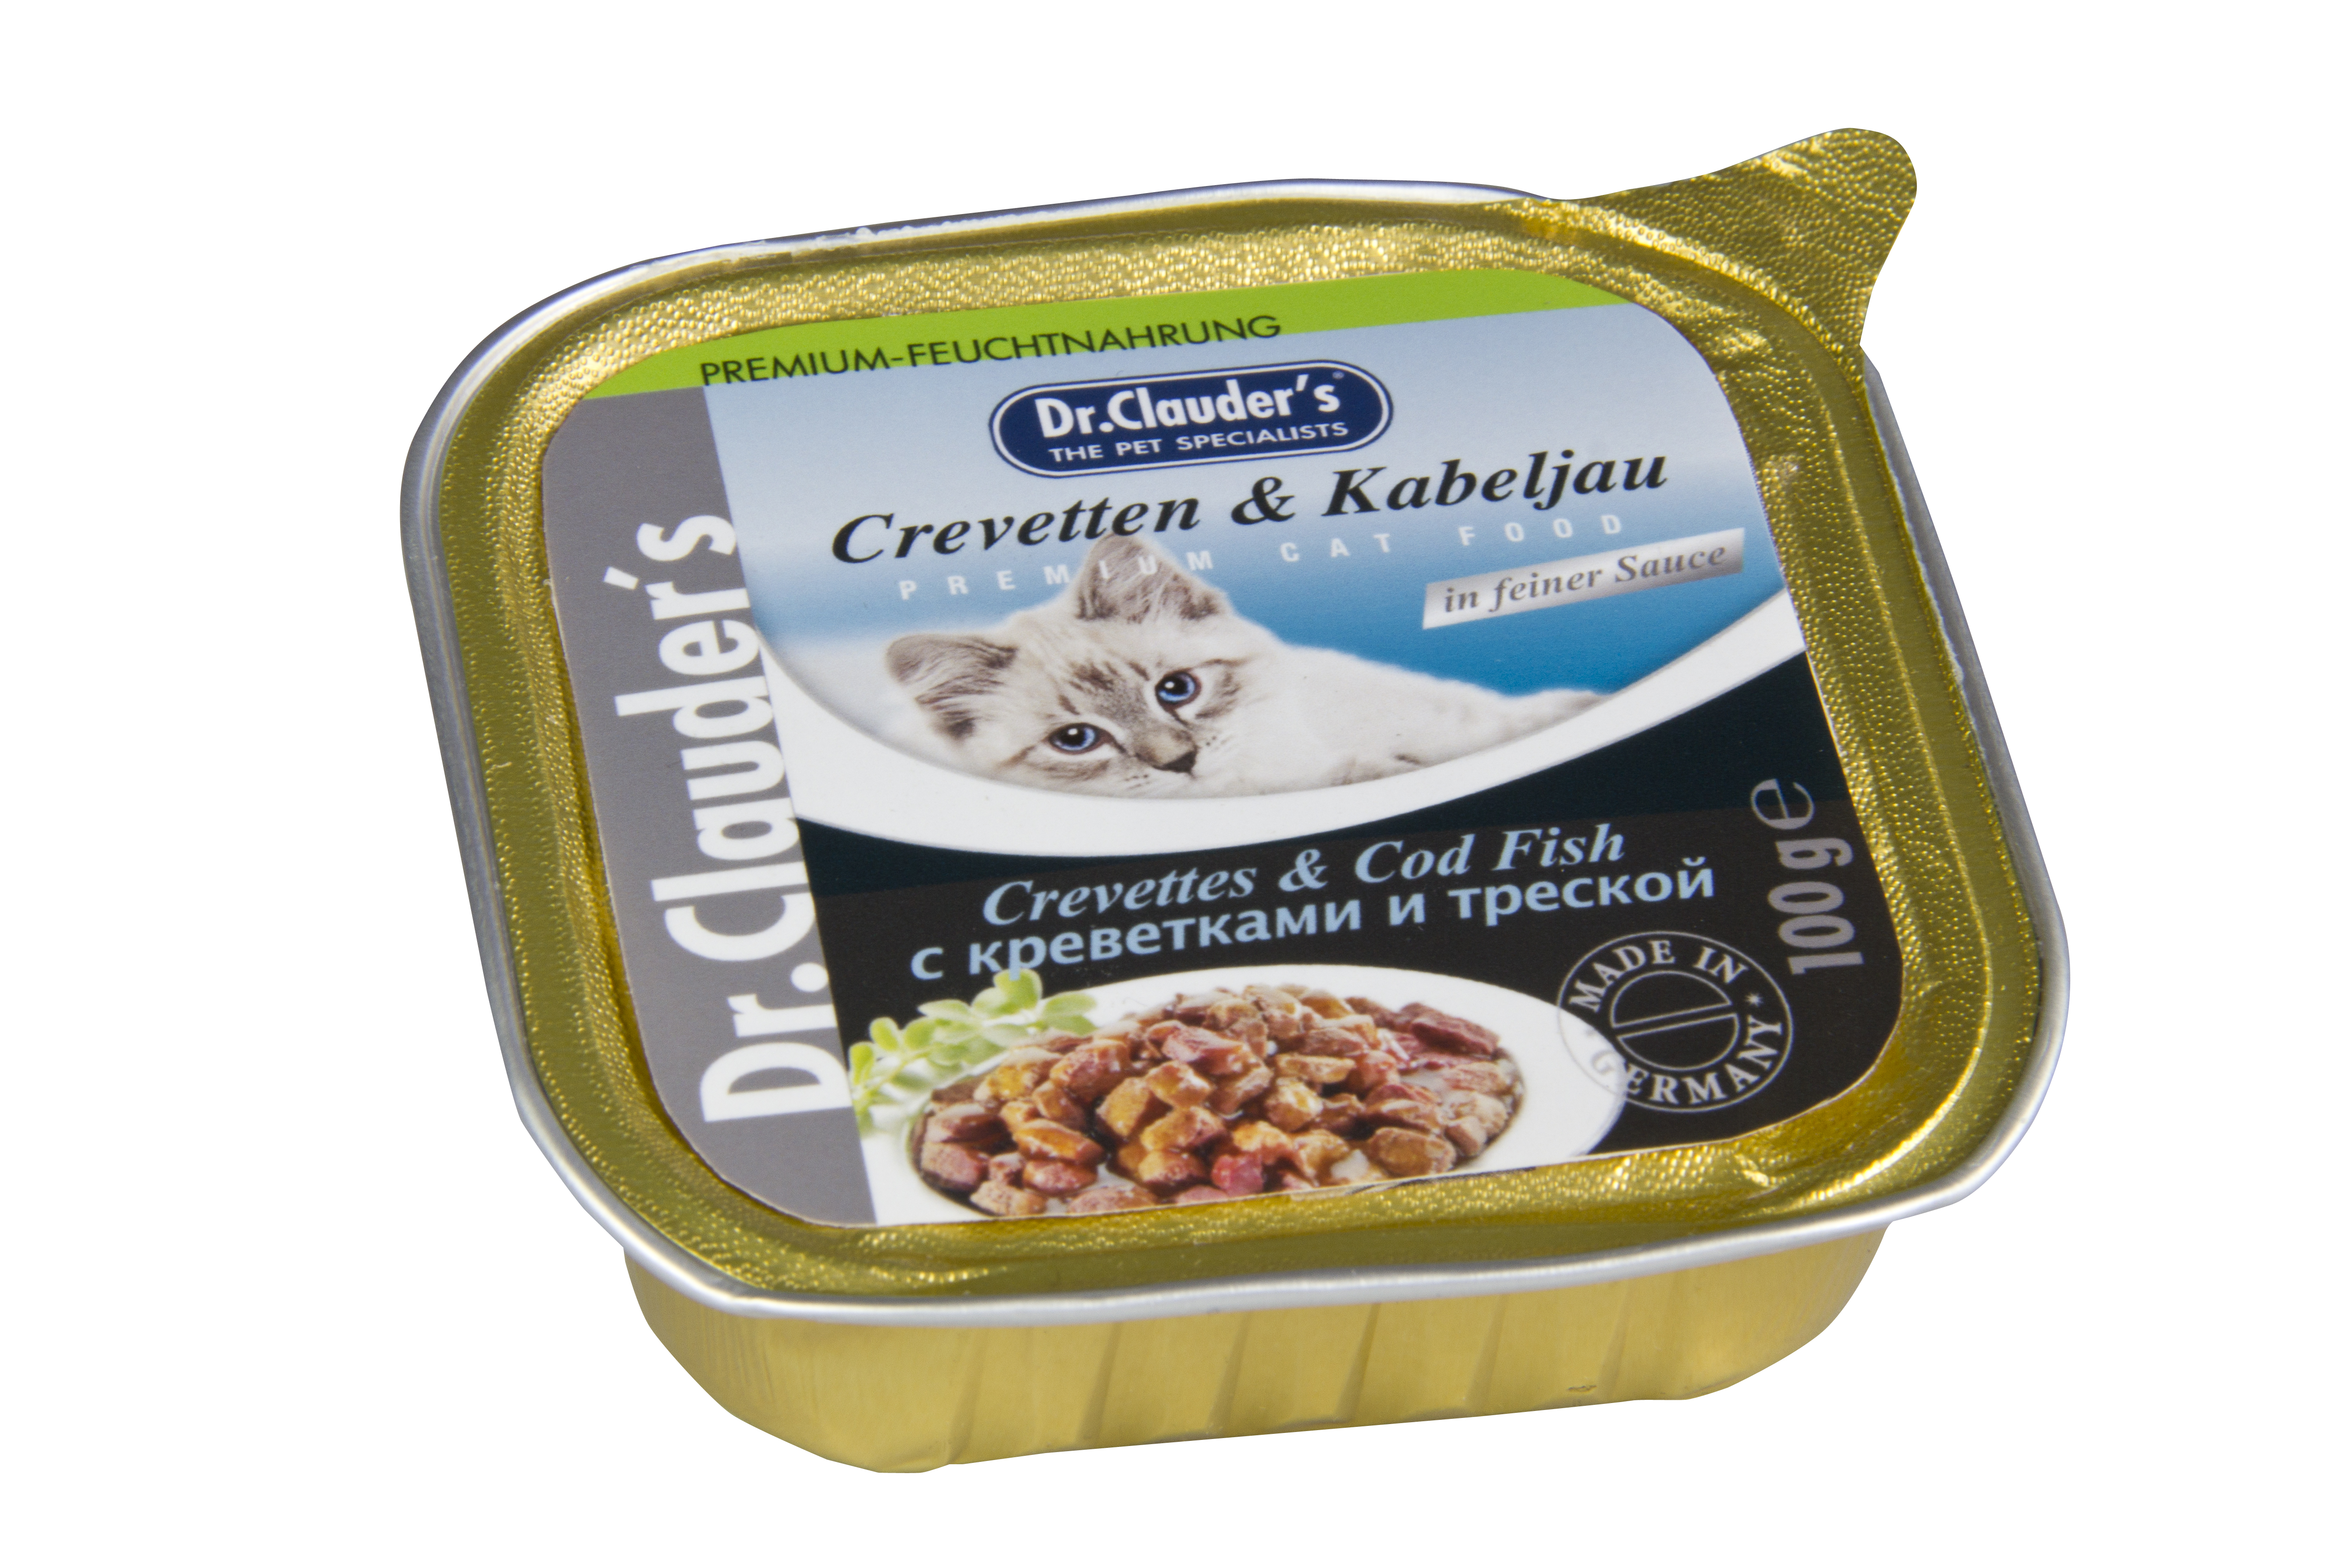 Dr.Clauder's Crevetten & Kabeljau